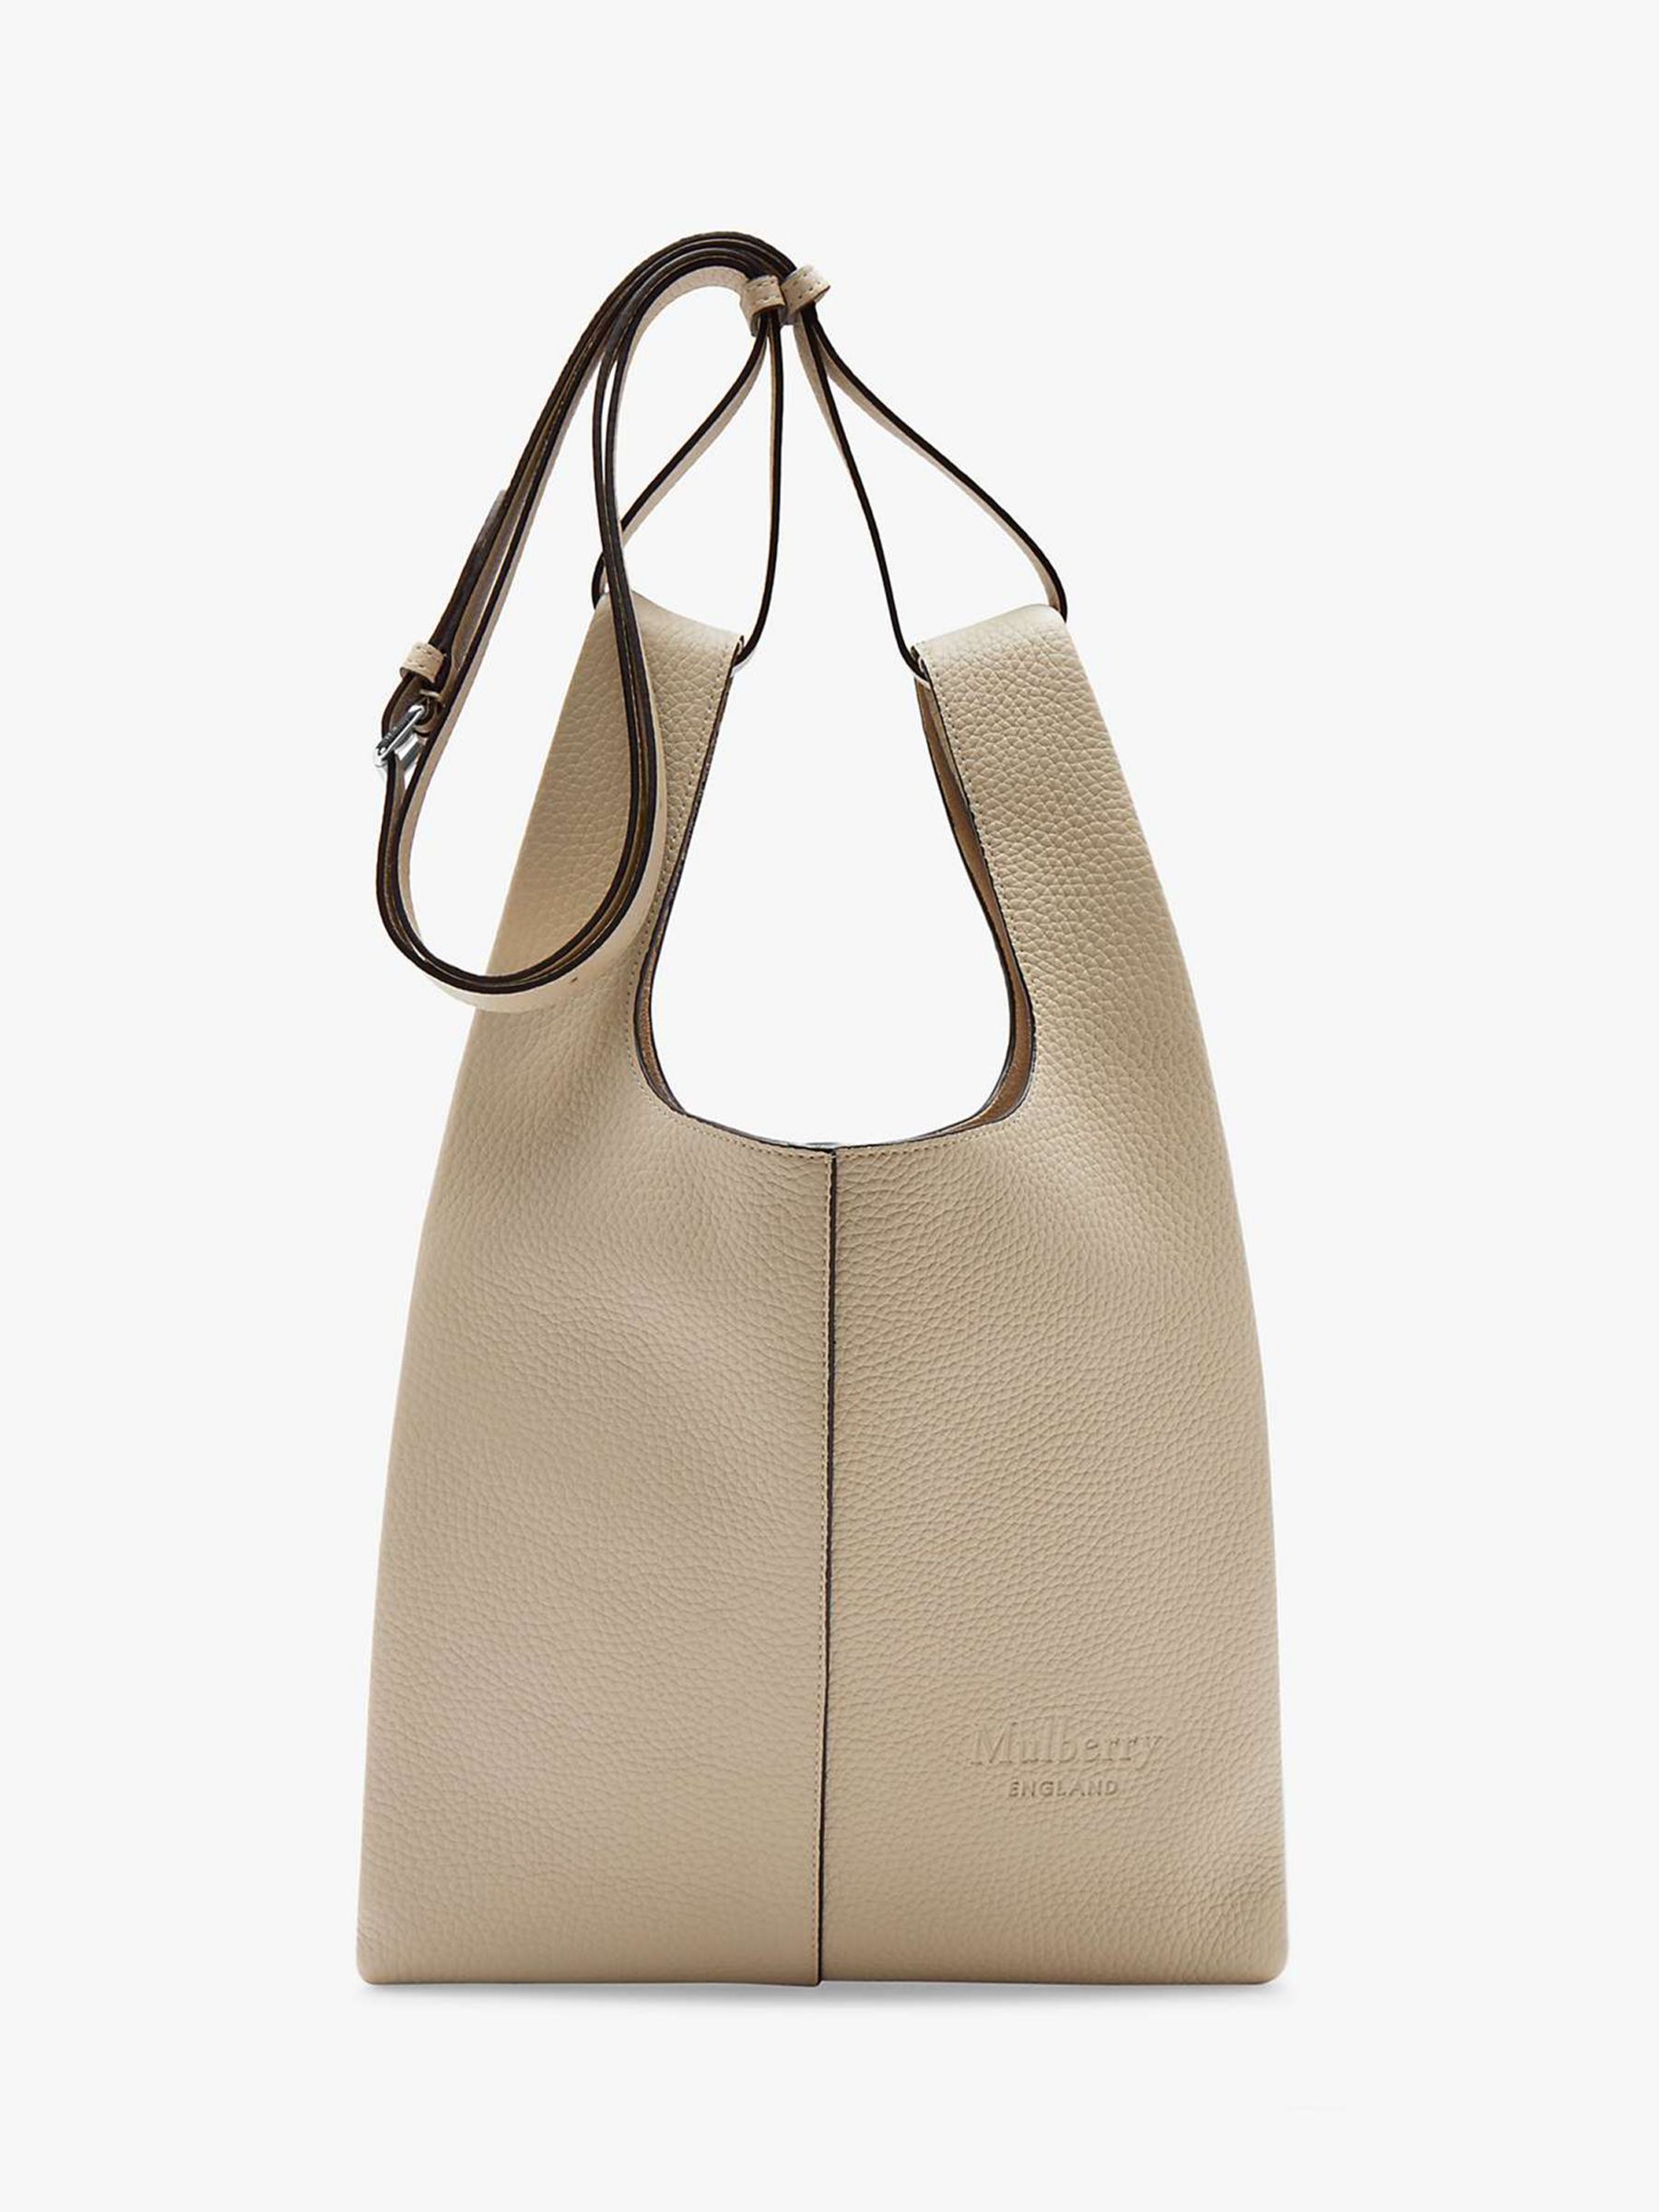 Women Leather  Bag Portobello W11 Ladies Cross Body Shoulder Handbag UK Rrp £110 